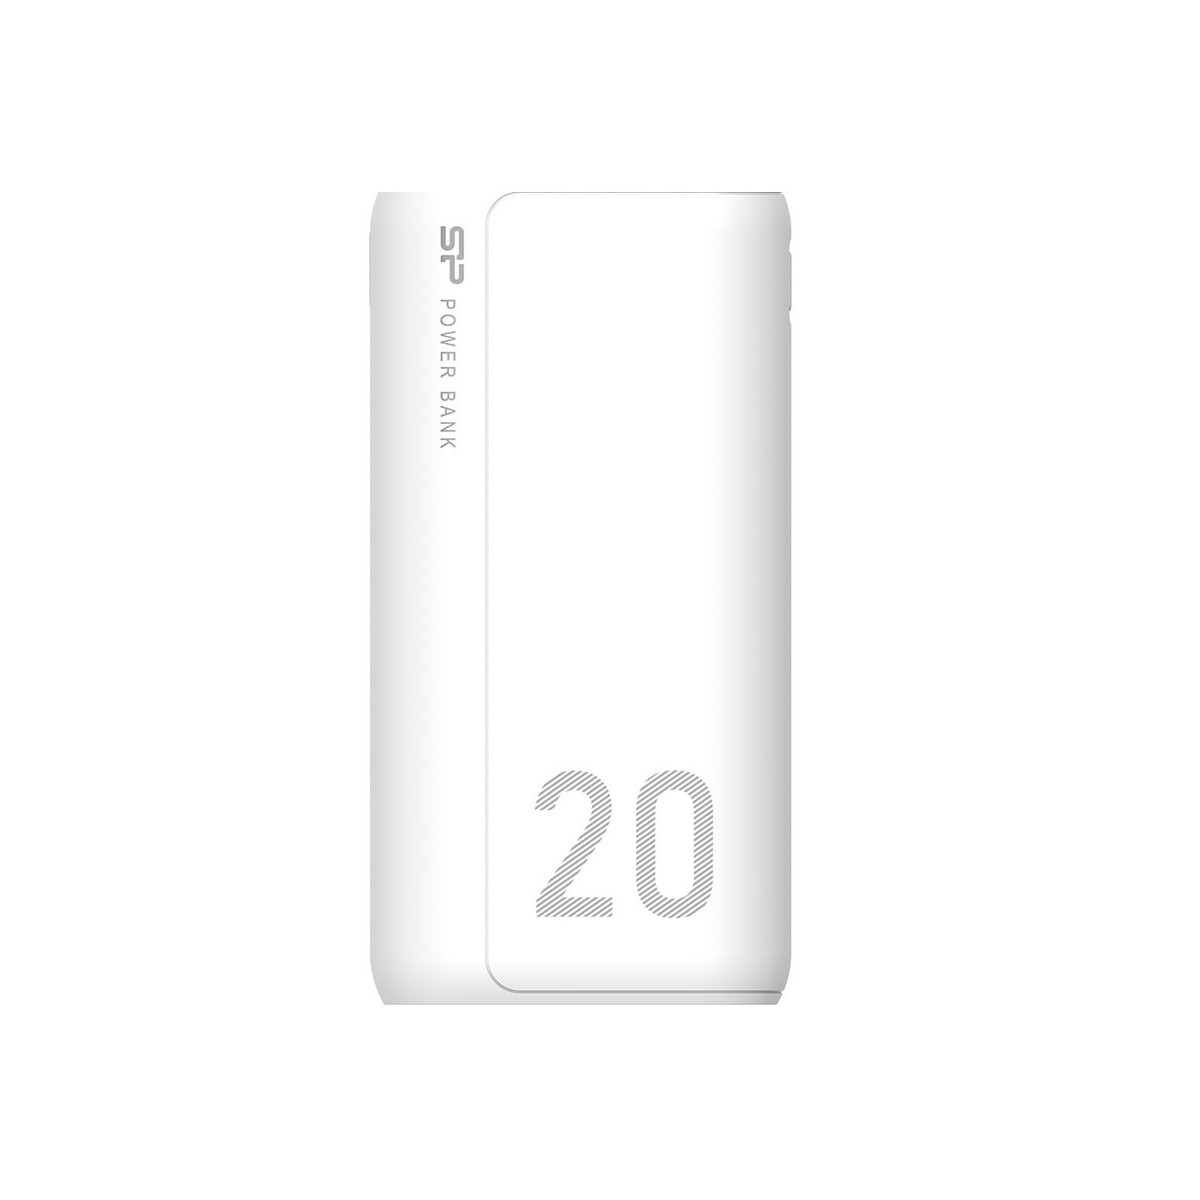 CABLE CHARGEUR USB A25 BIBOSHI 5.0A BLANC